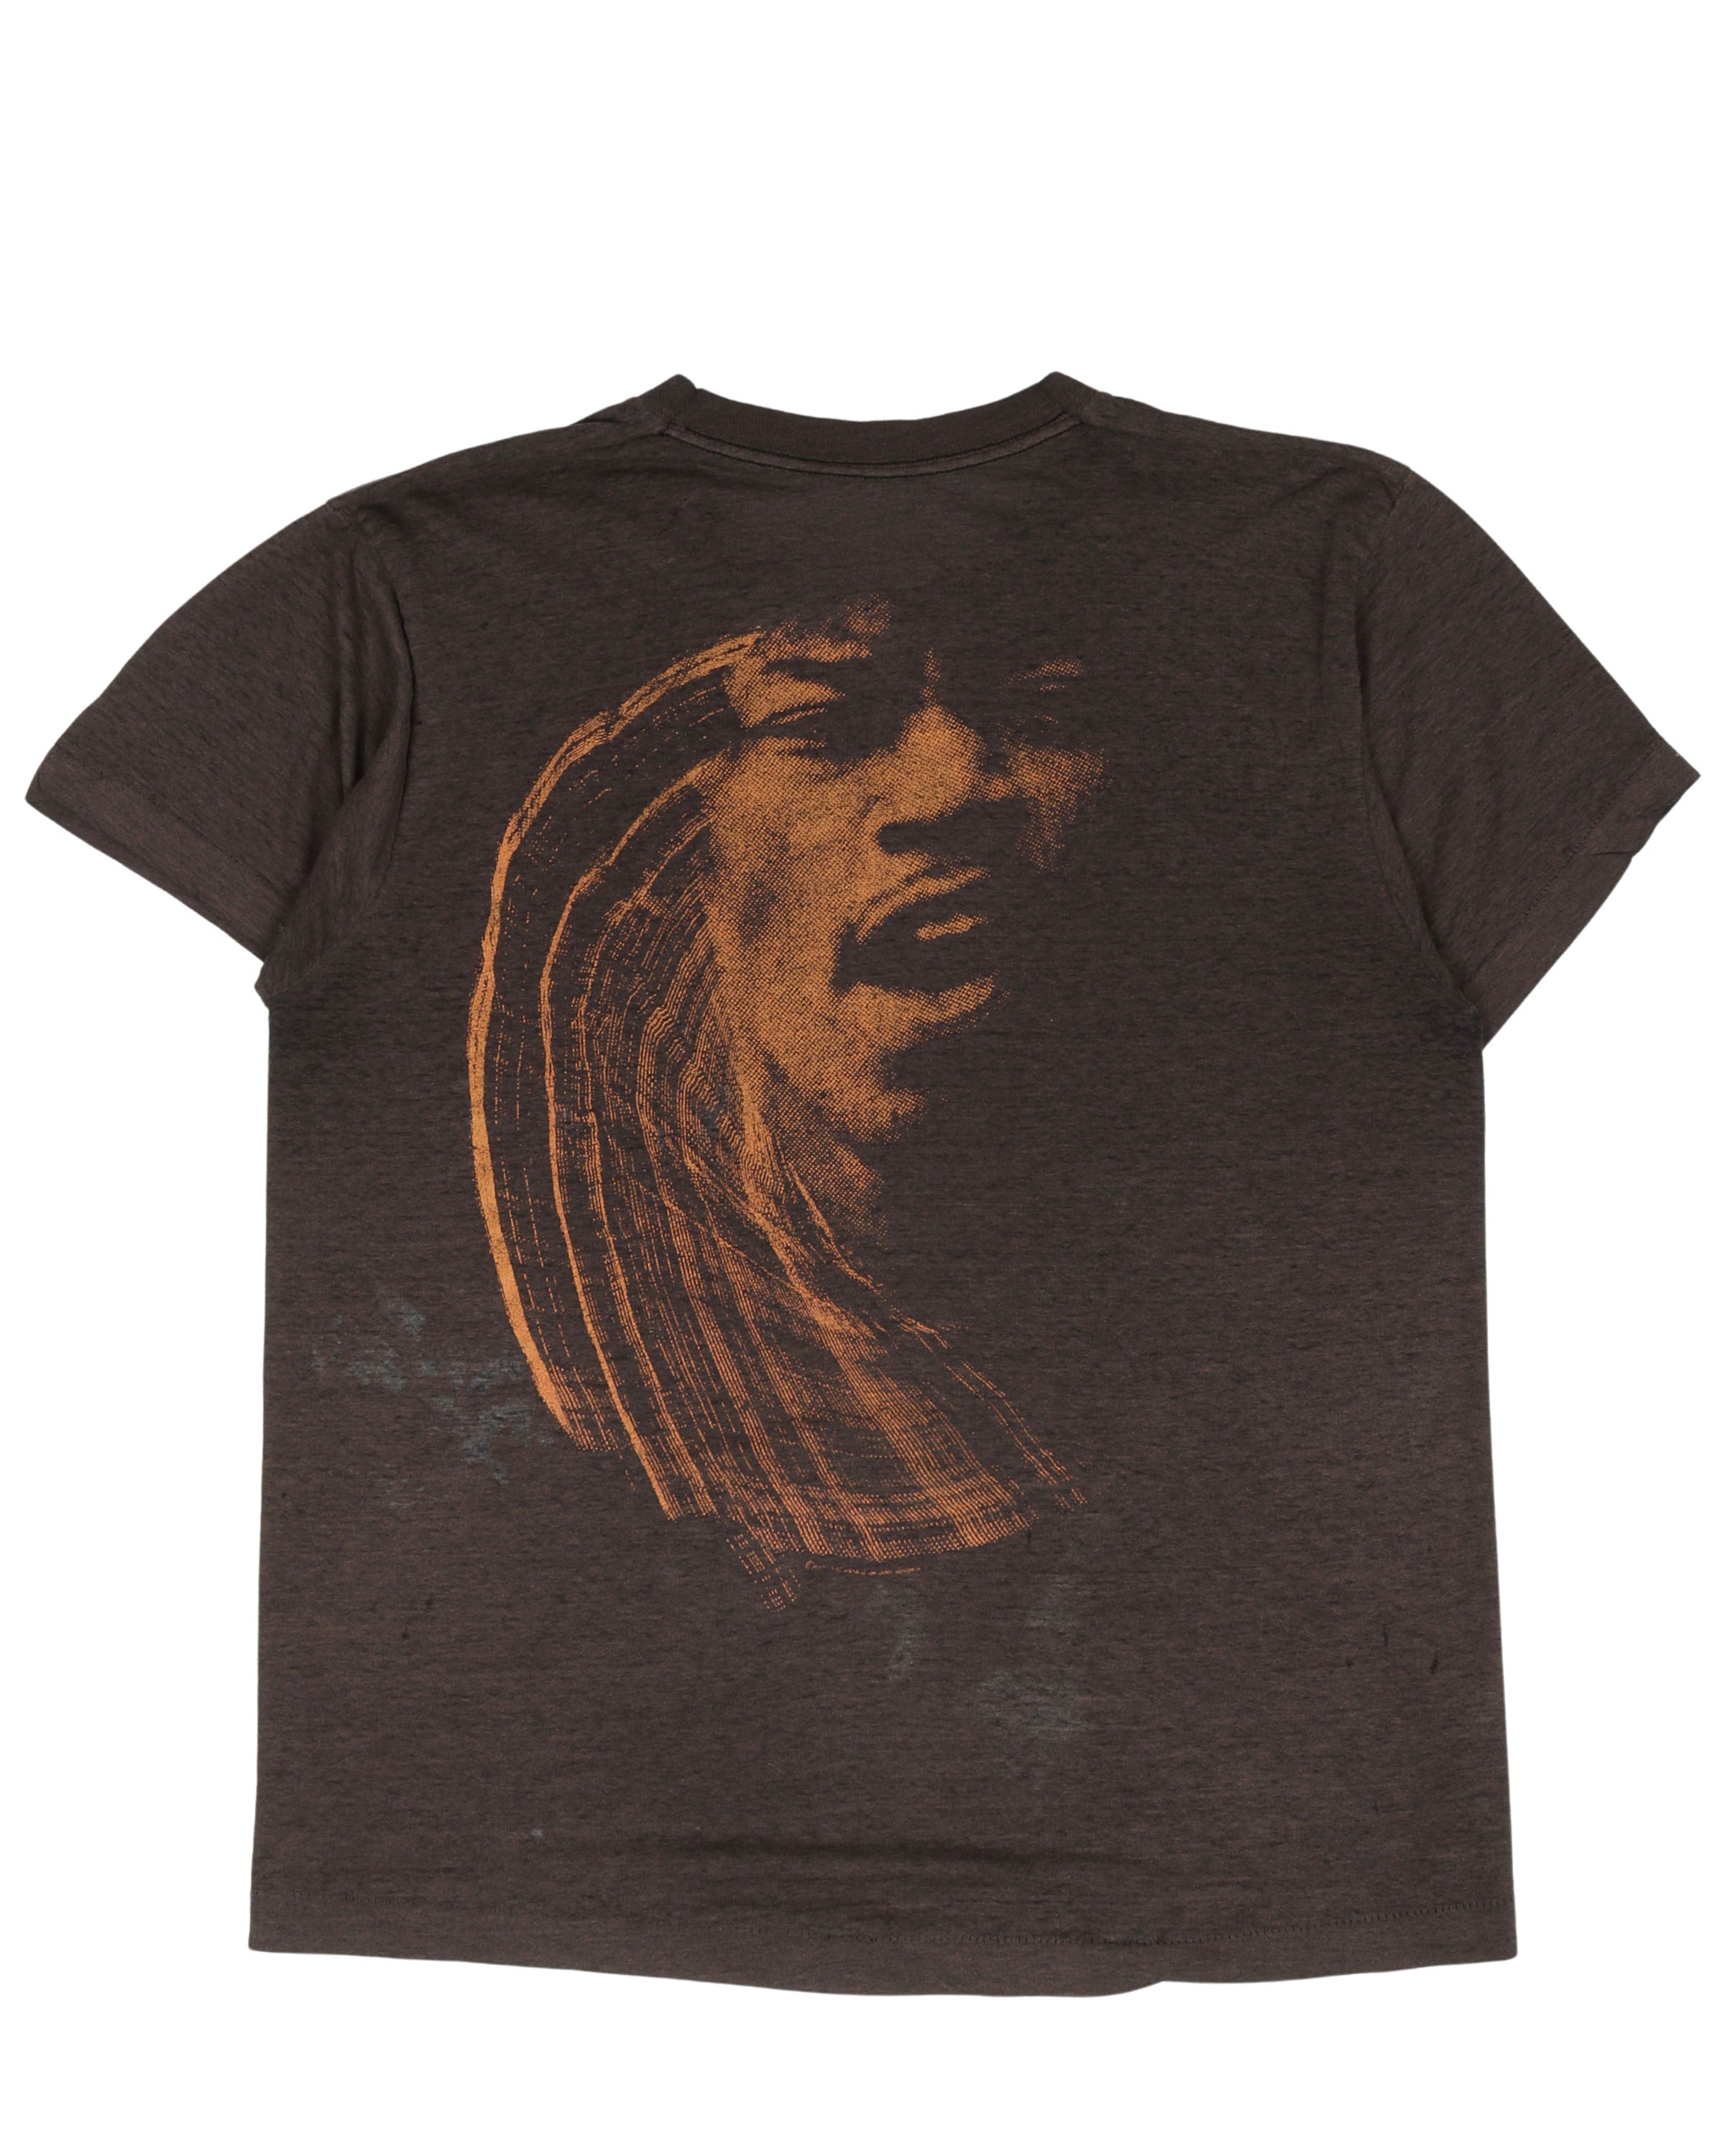 Jimi Hendrix Portrait T-Shirt